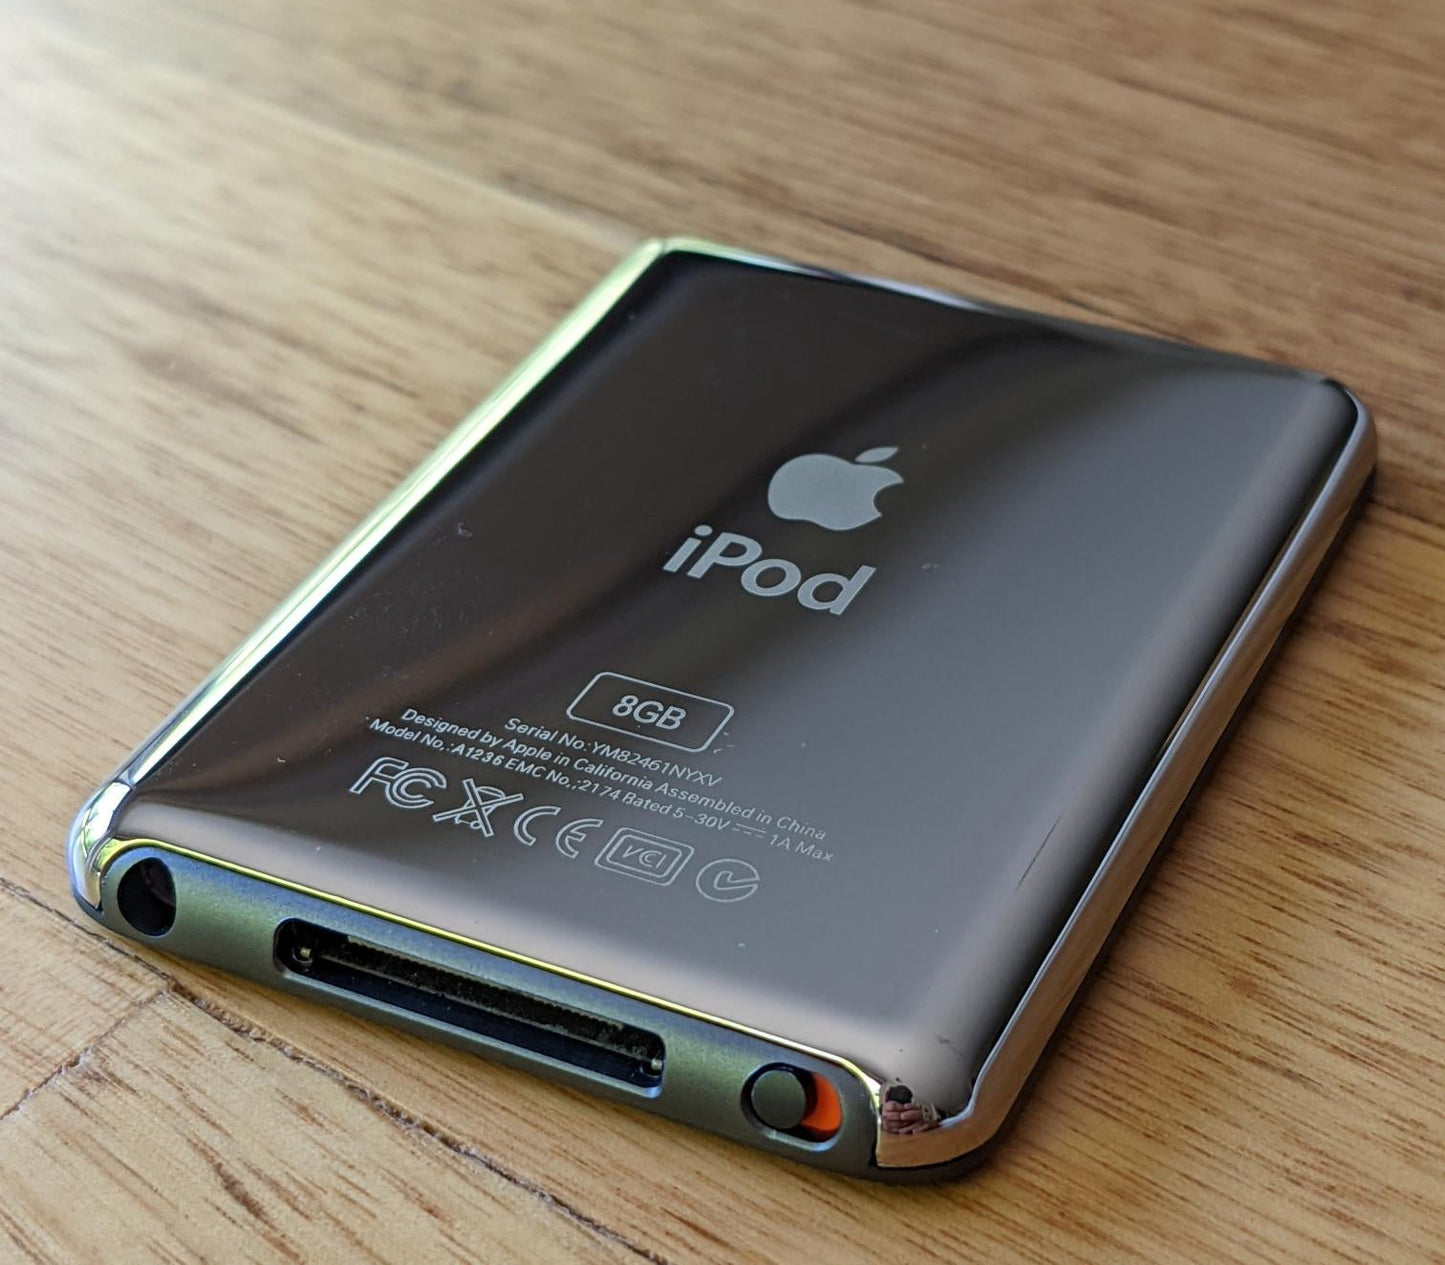 Apple iPod Nano 3rd Gen 8GB Red